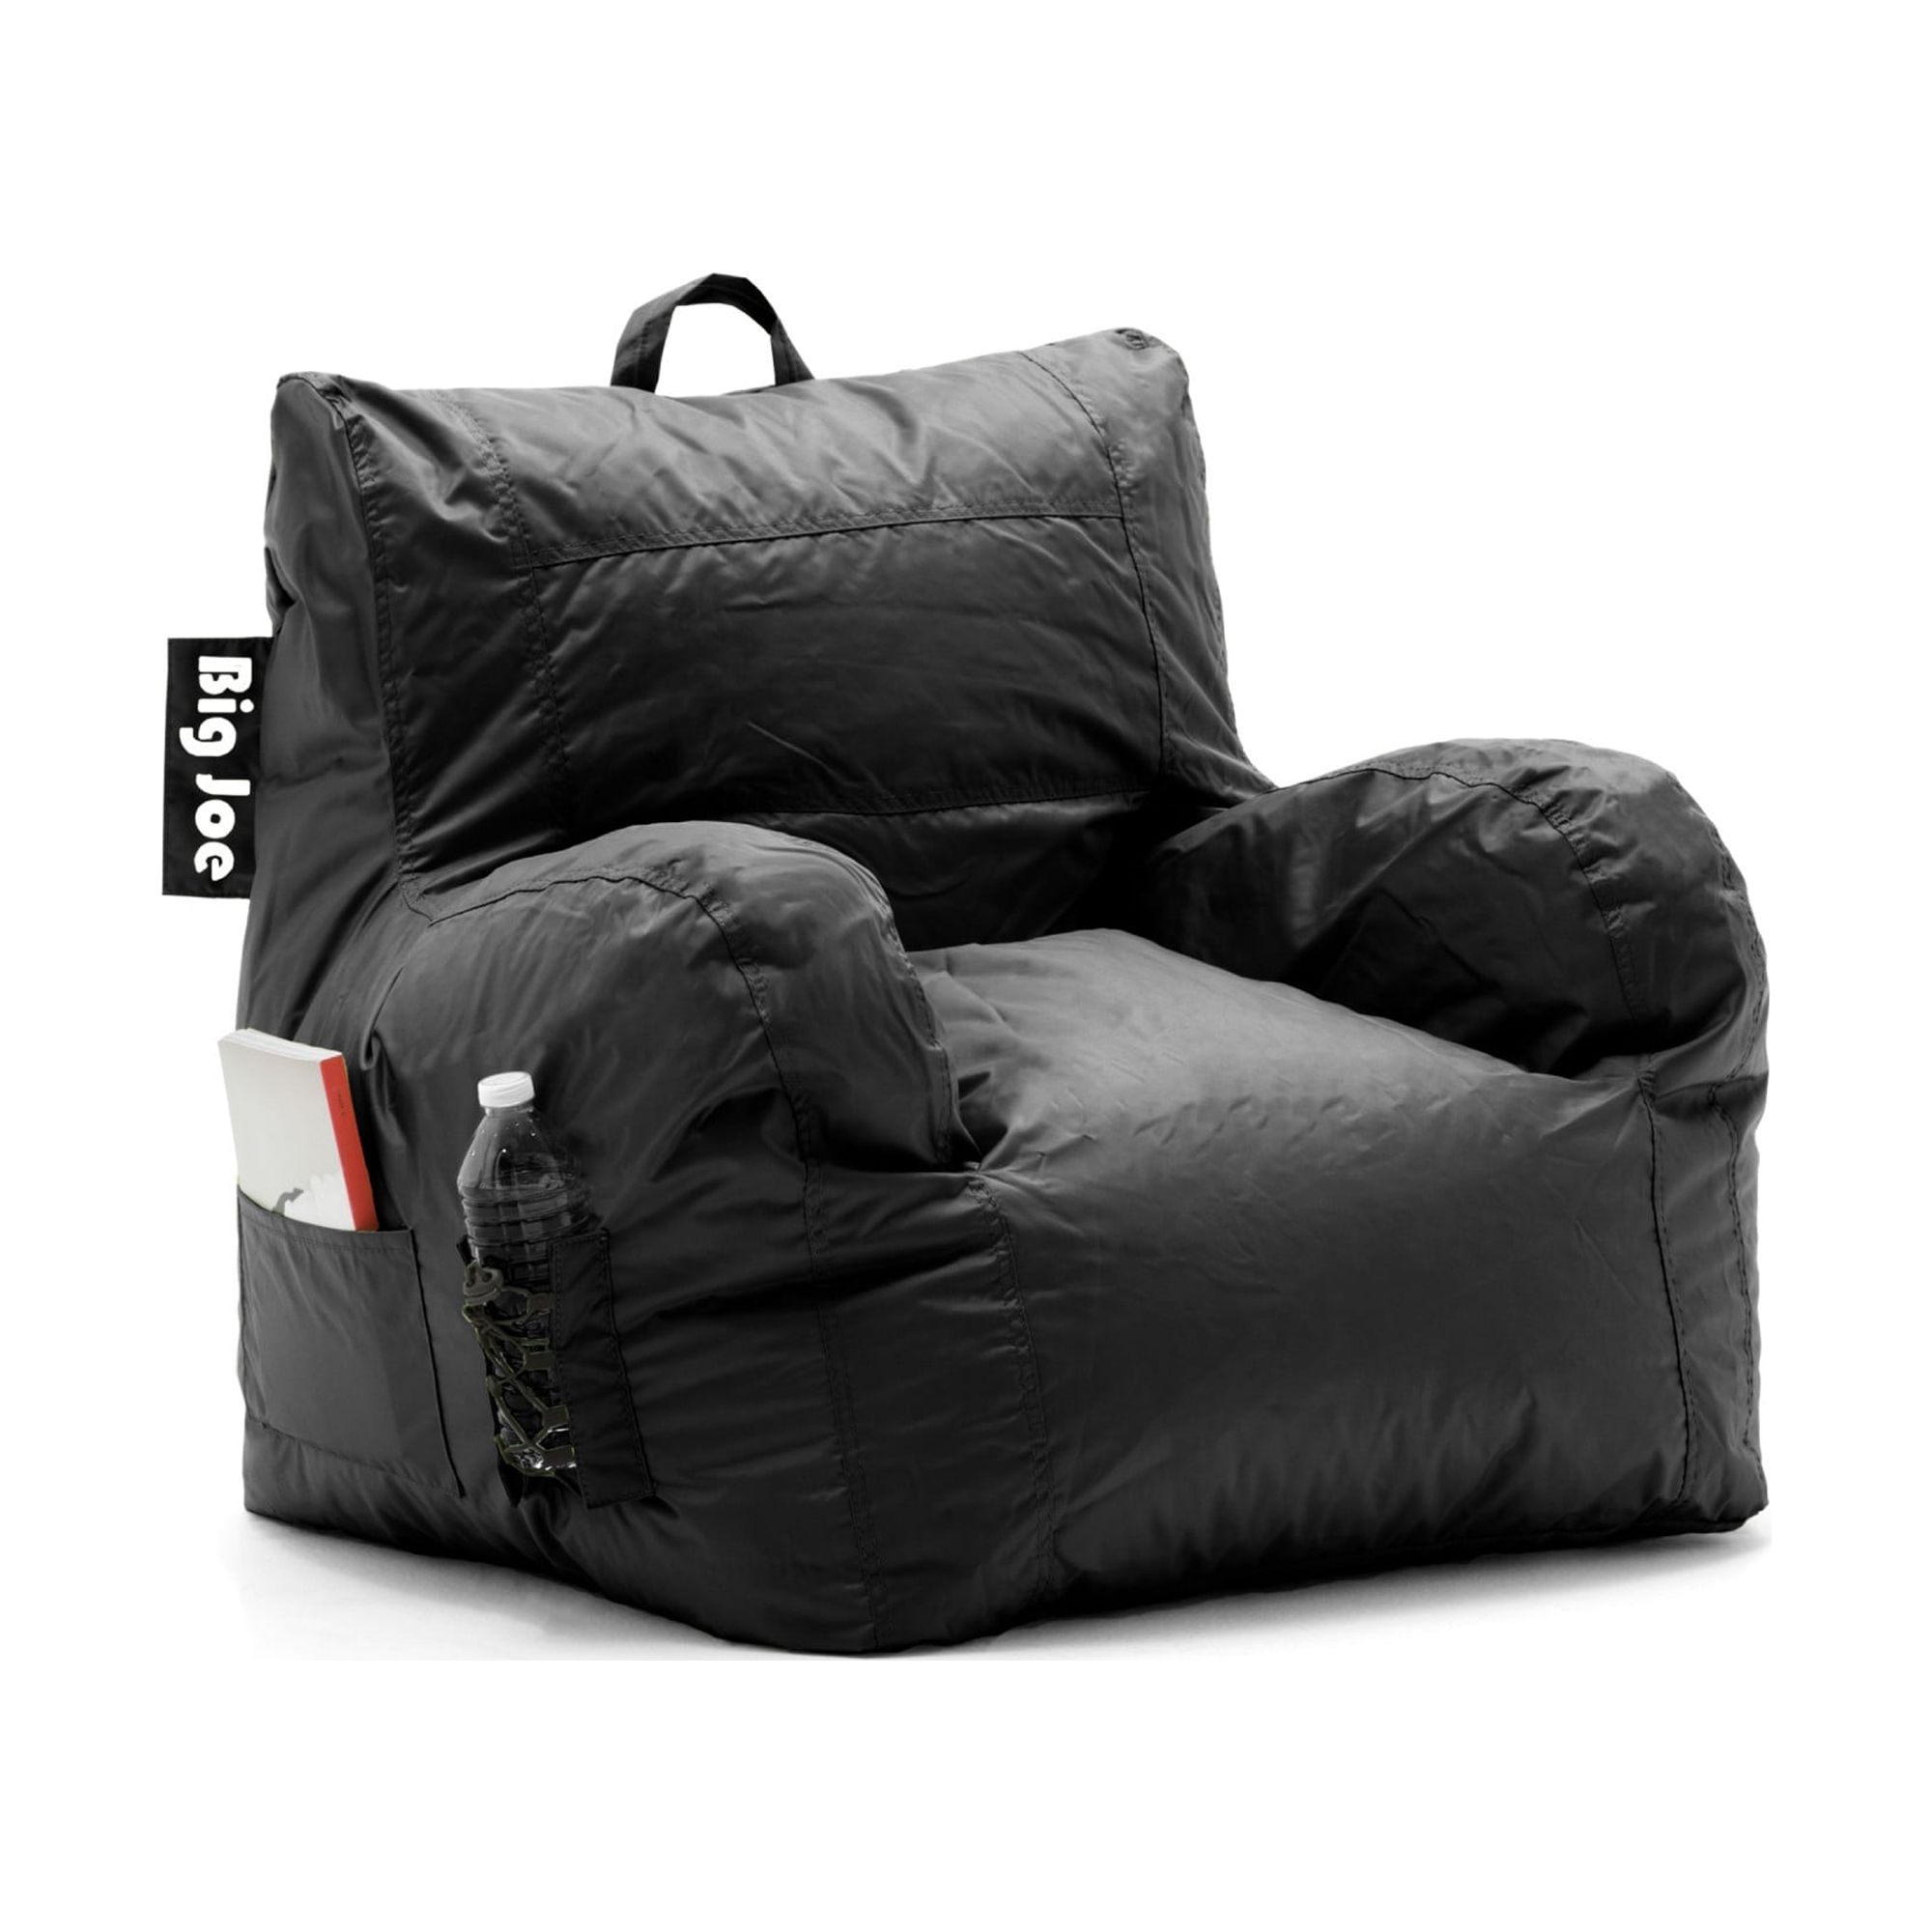 Big Joe Dorm Bean Bag Chair with Drink Holder and Pocket, Black Smartmax, Durable Polyester Nylon Blend, 3 feet - image 3 of 10